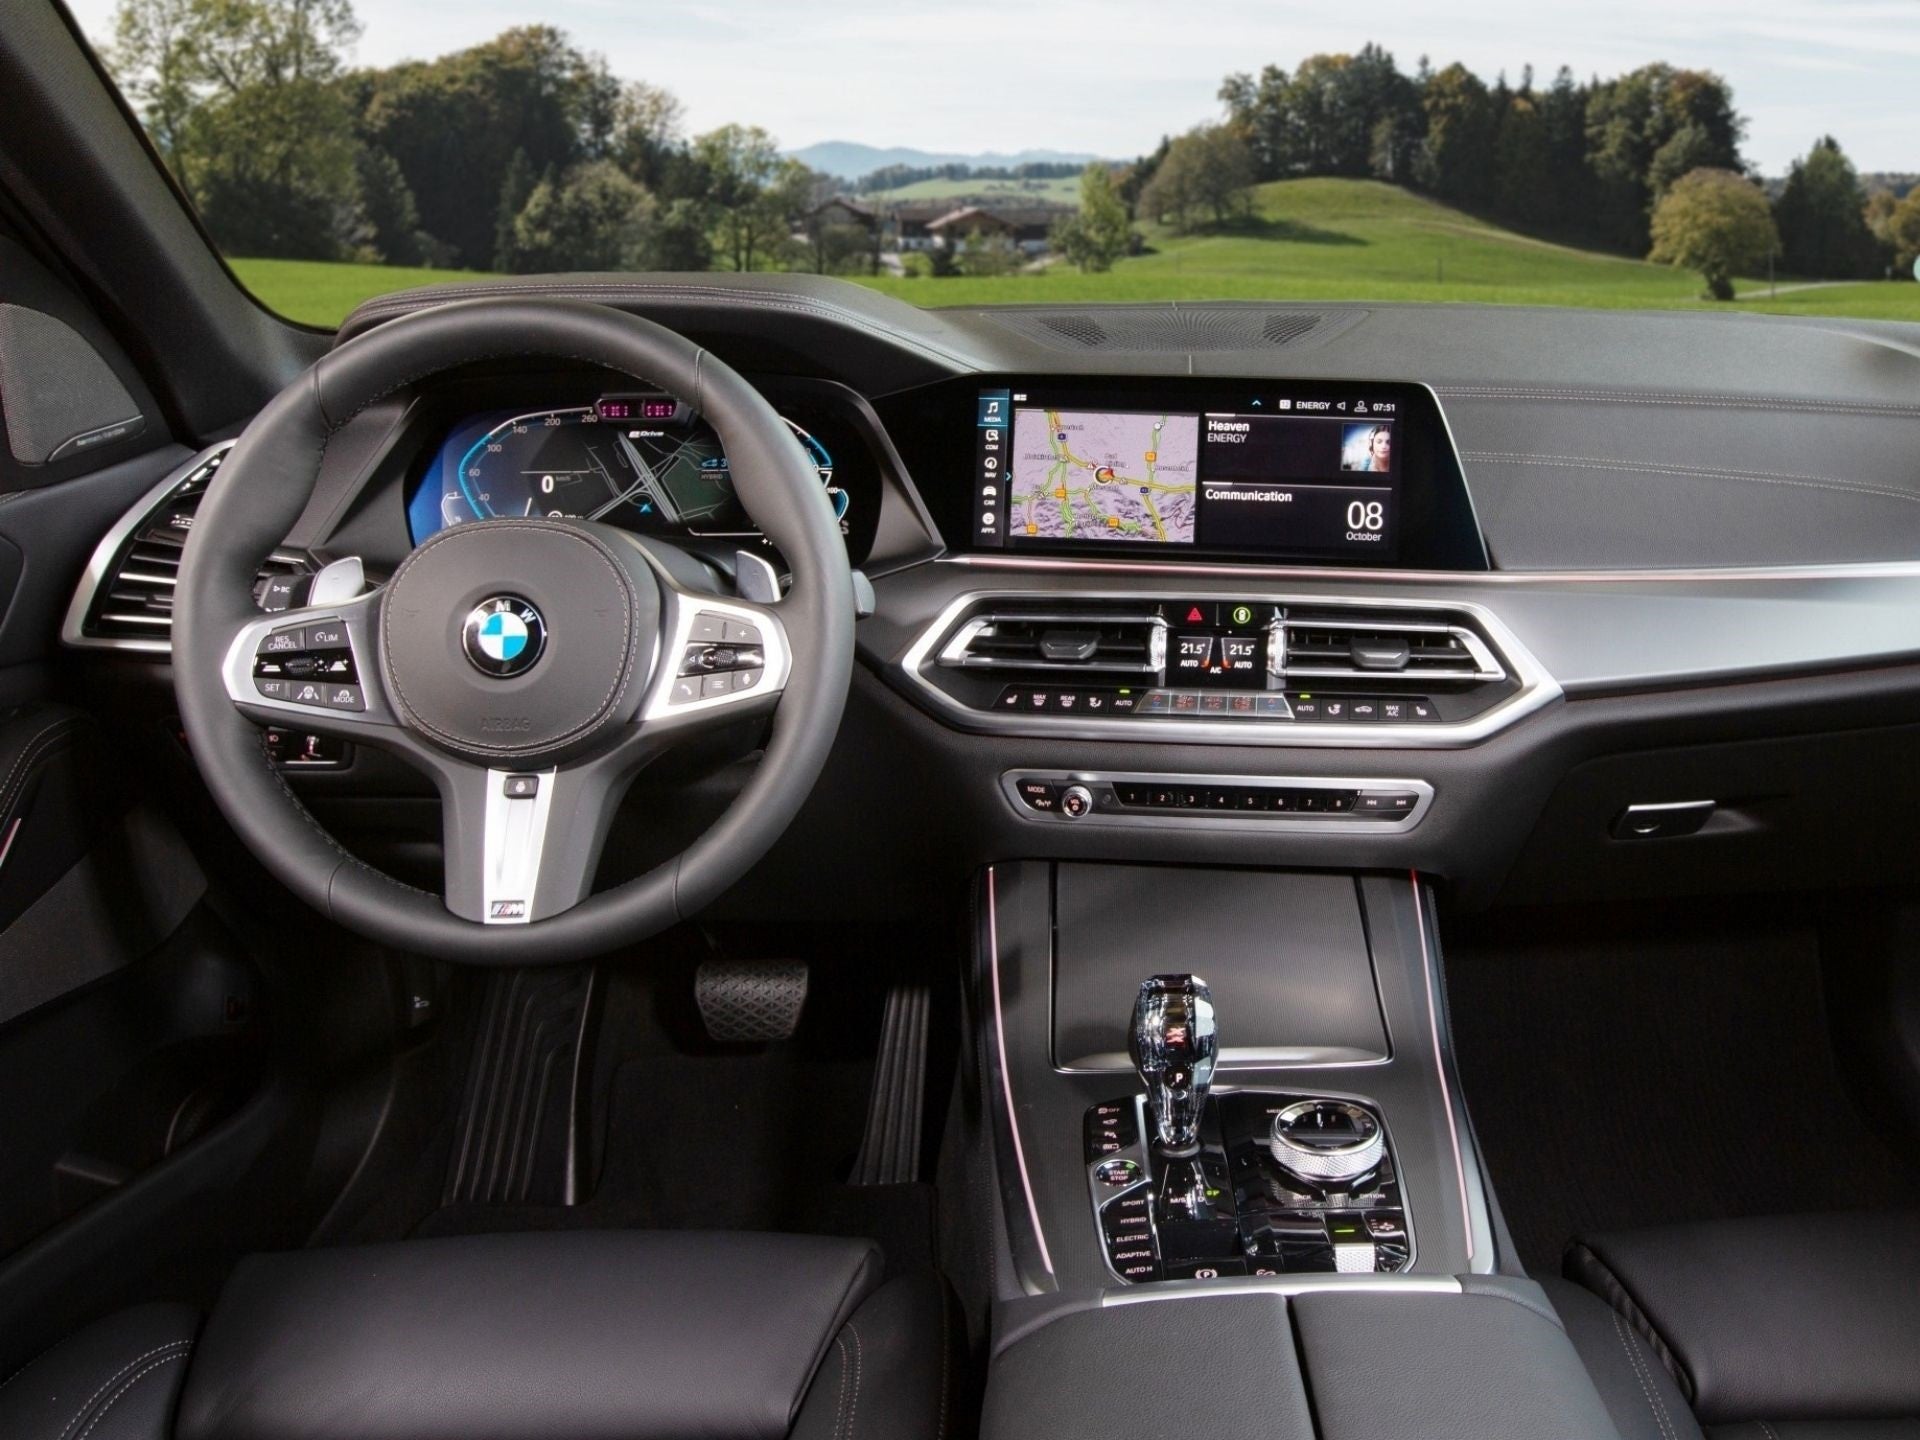 2021 BMW X5 xDrive45e PHEV review: A greener luxury sport SUV